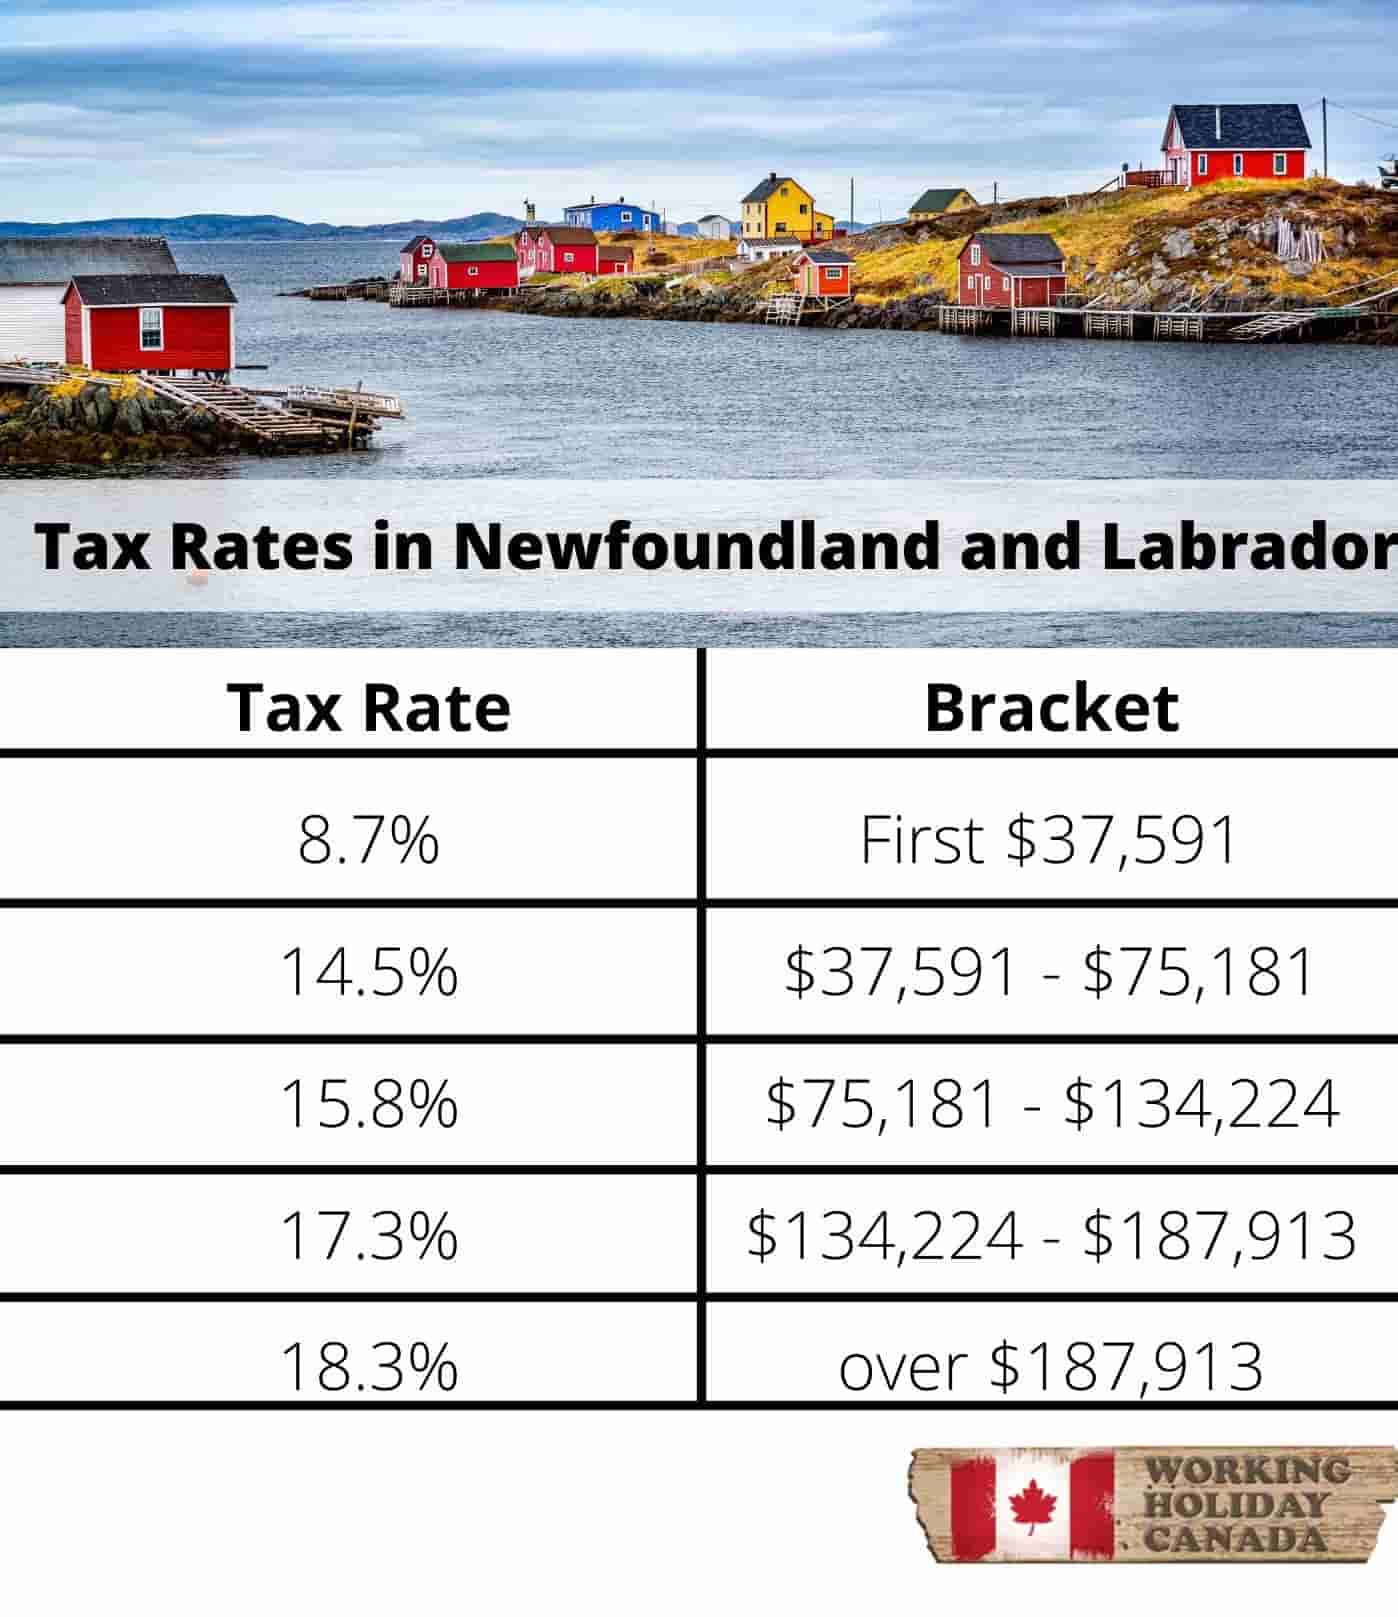 Newfoundland and Labrador tax rates